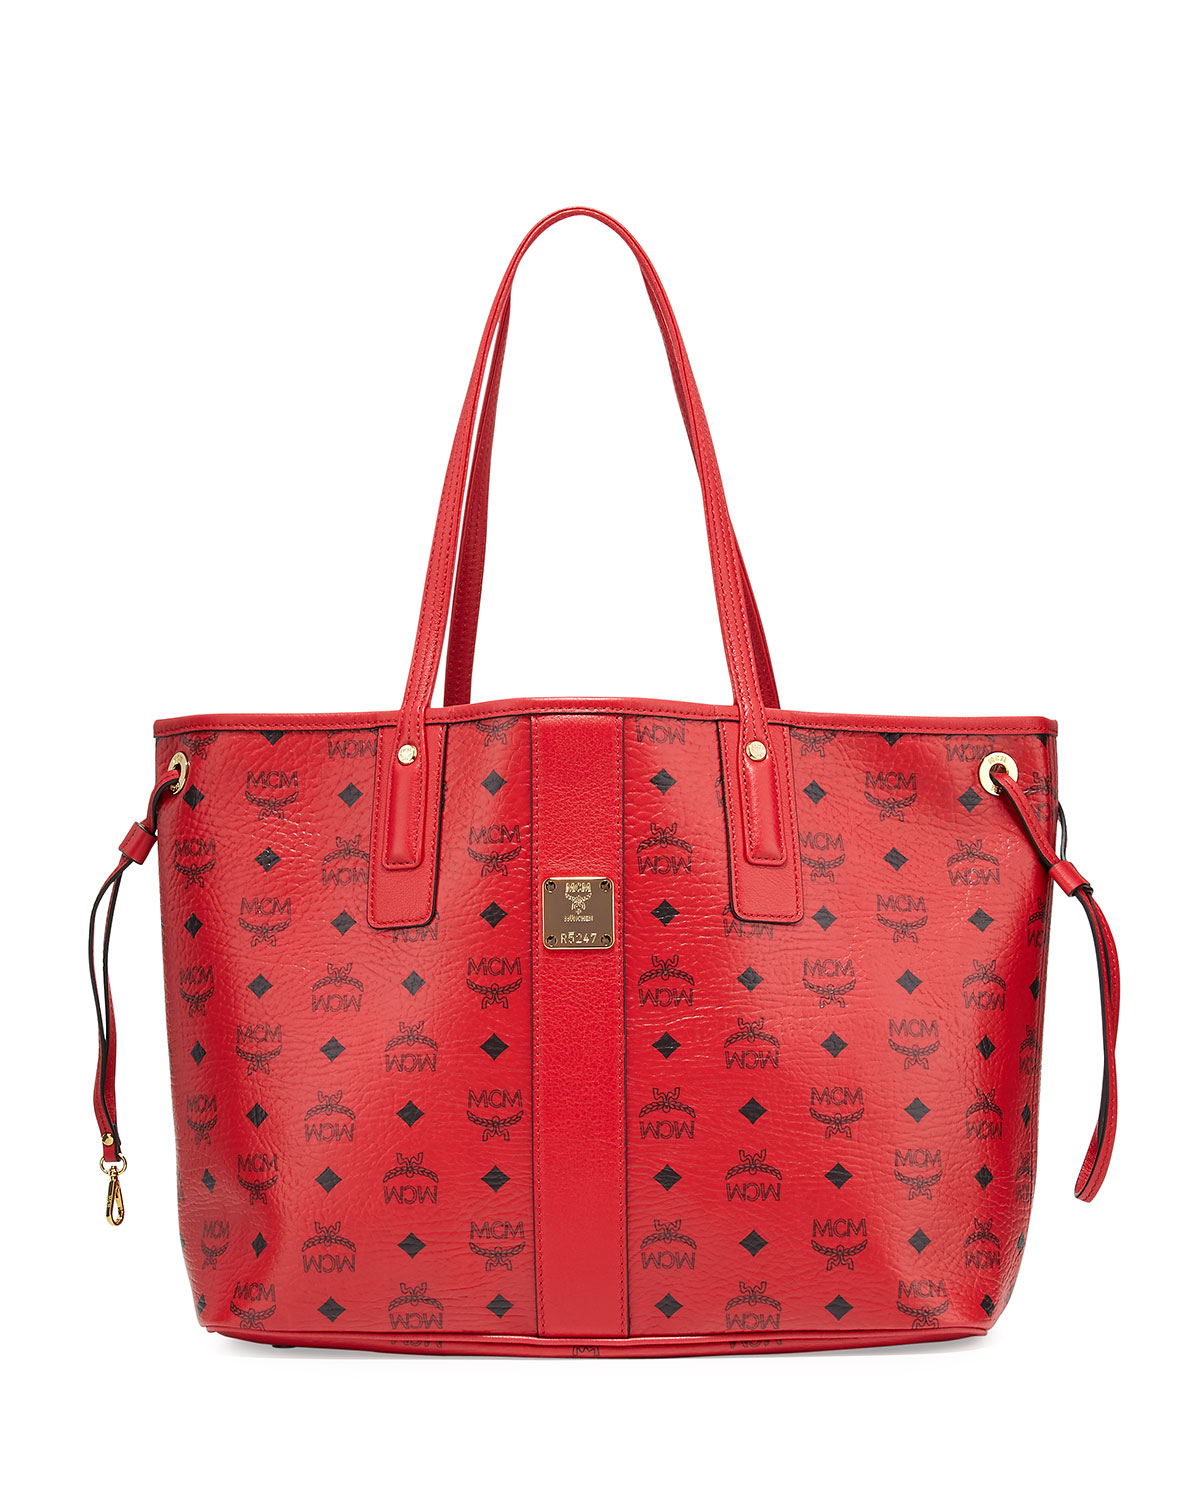 MCM Handbags for Sale - Bing